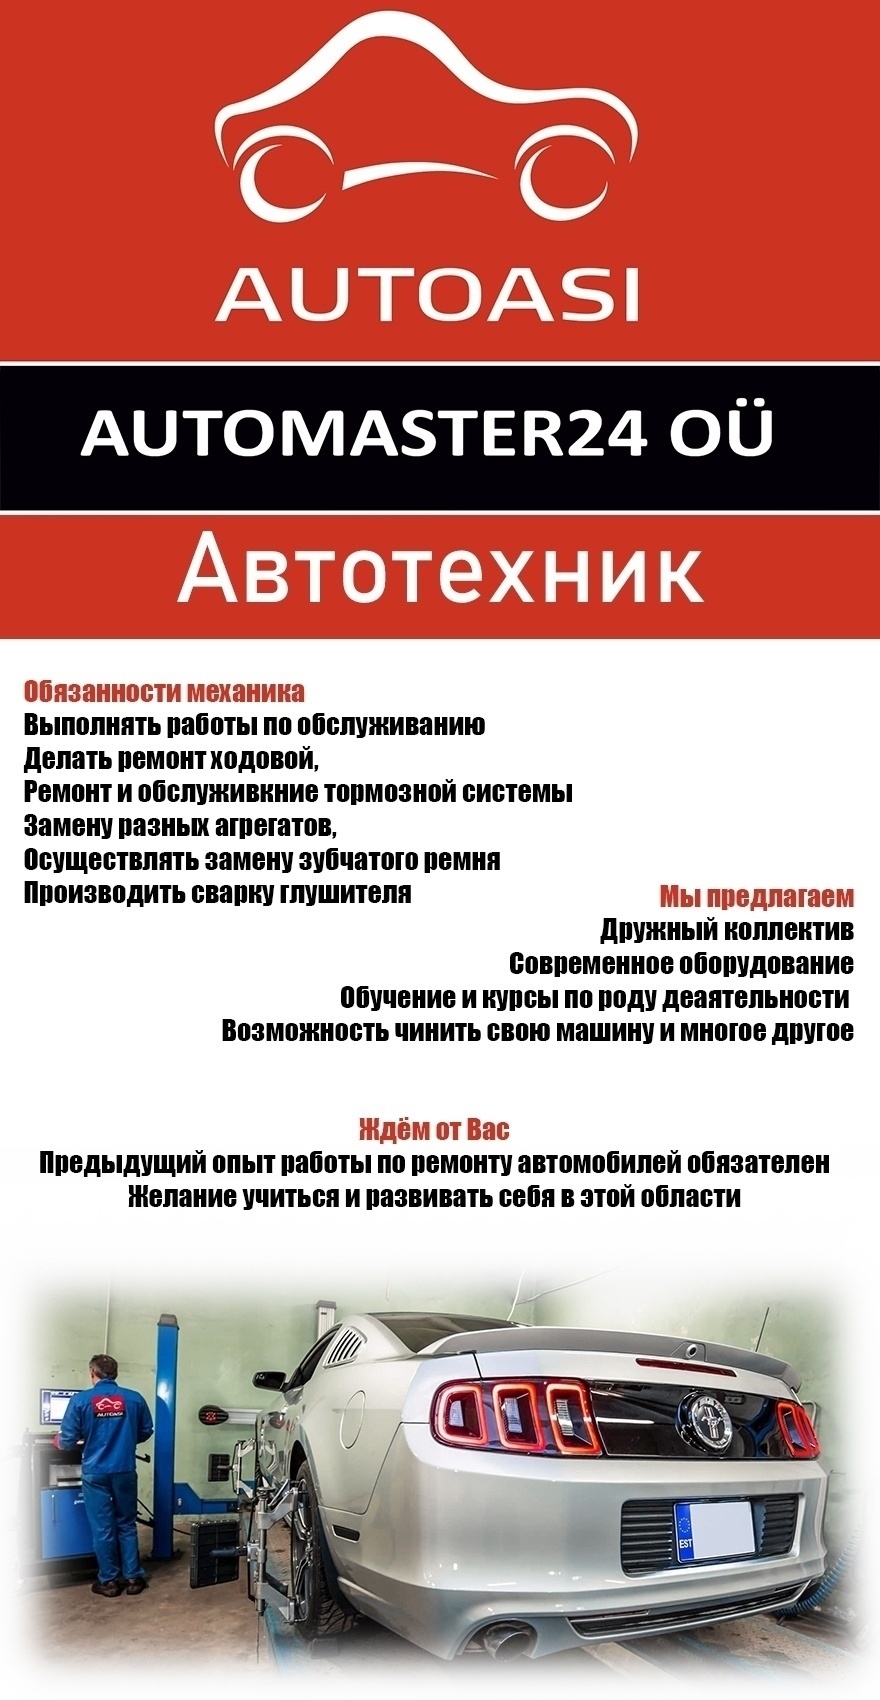 Automaster24 OÜ Автотехник